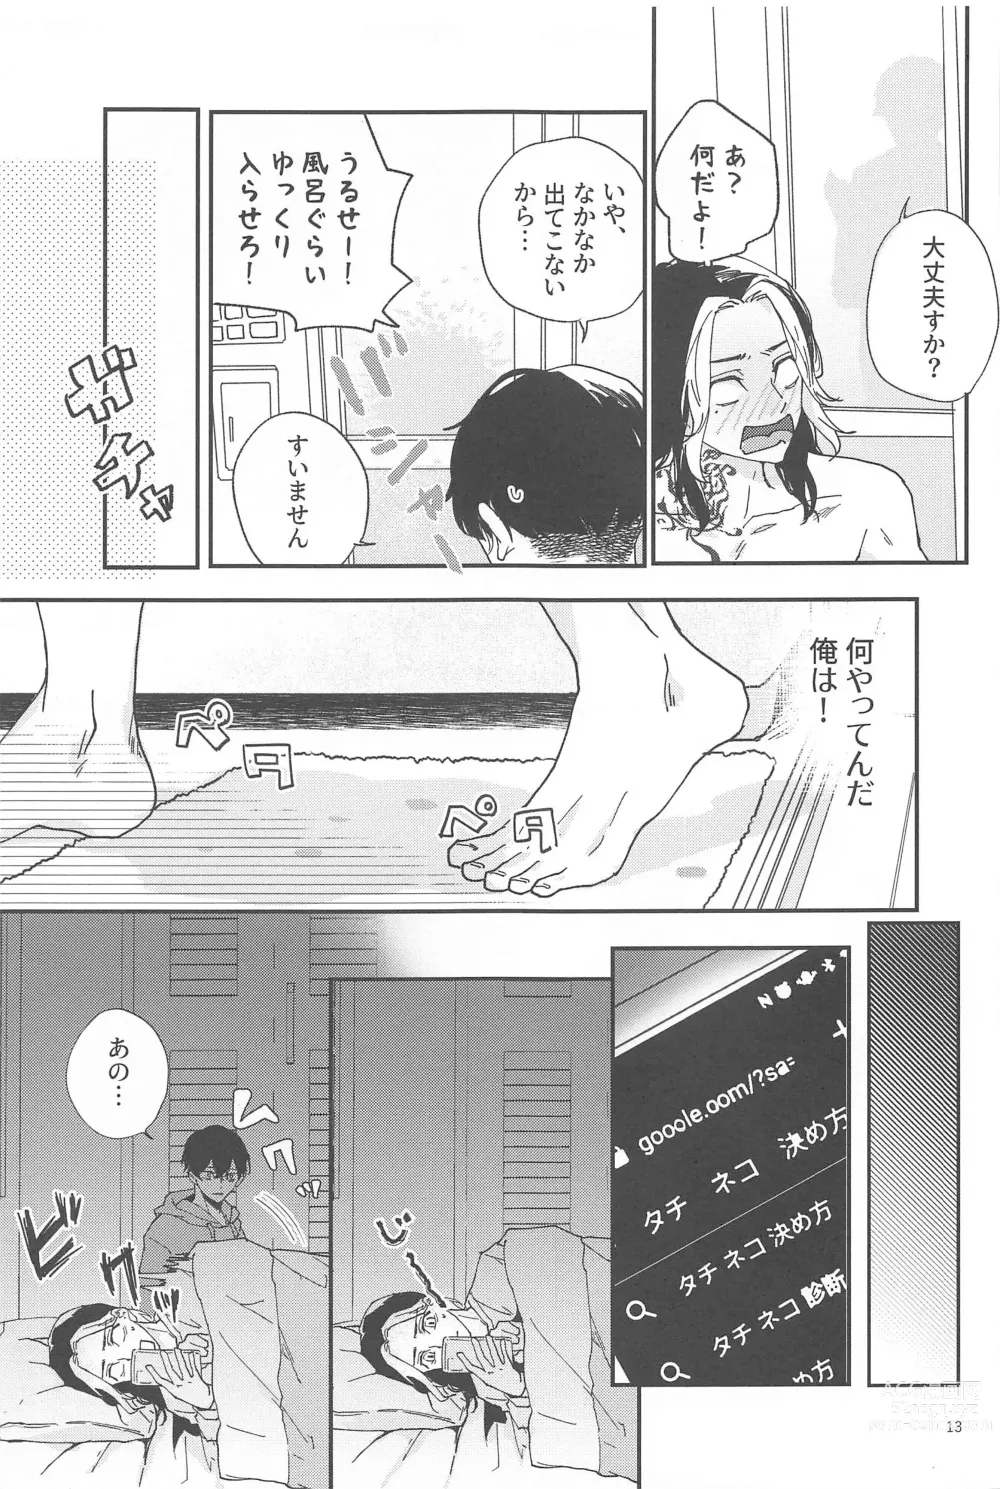 Page 12 of doujinshi Reverse Kisei Jijitsu  no Ryouomoi